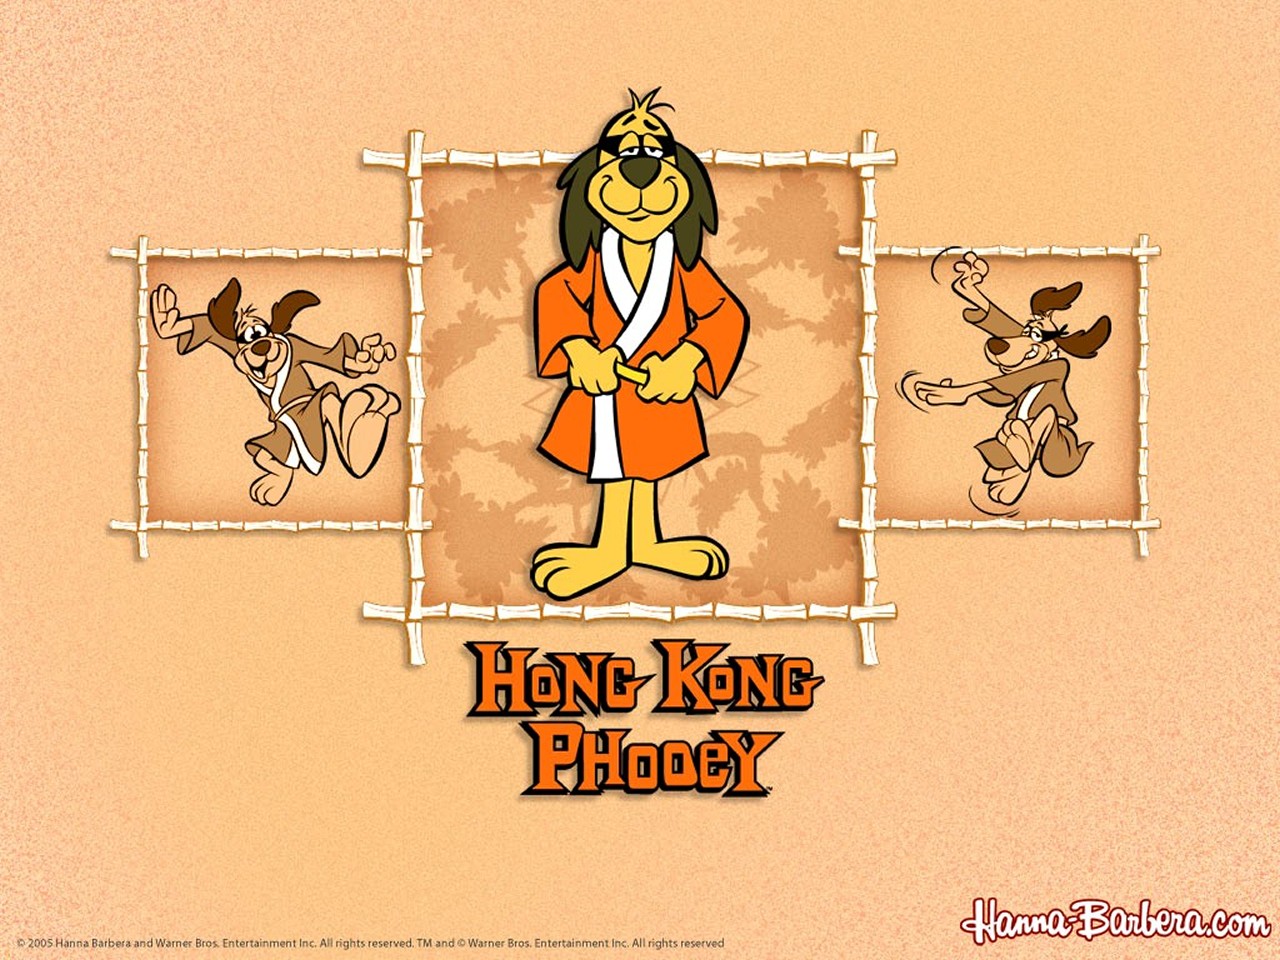 "Hong Kong Phooey" desktop wallpaper (1280 x 960 pixels)